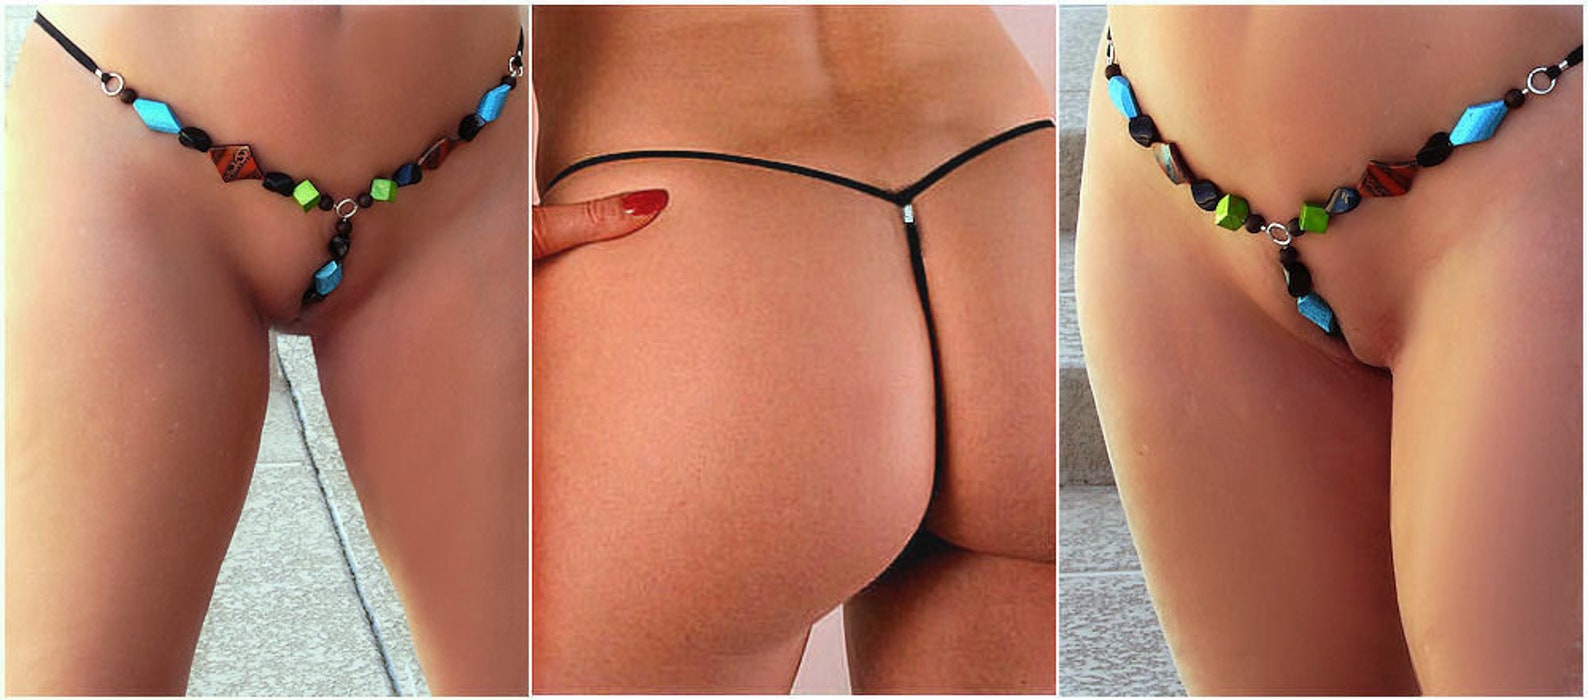 Dubio Bikini DLB-14 Crotchless Extreme Bikini G-String Beaded Bottom.